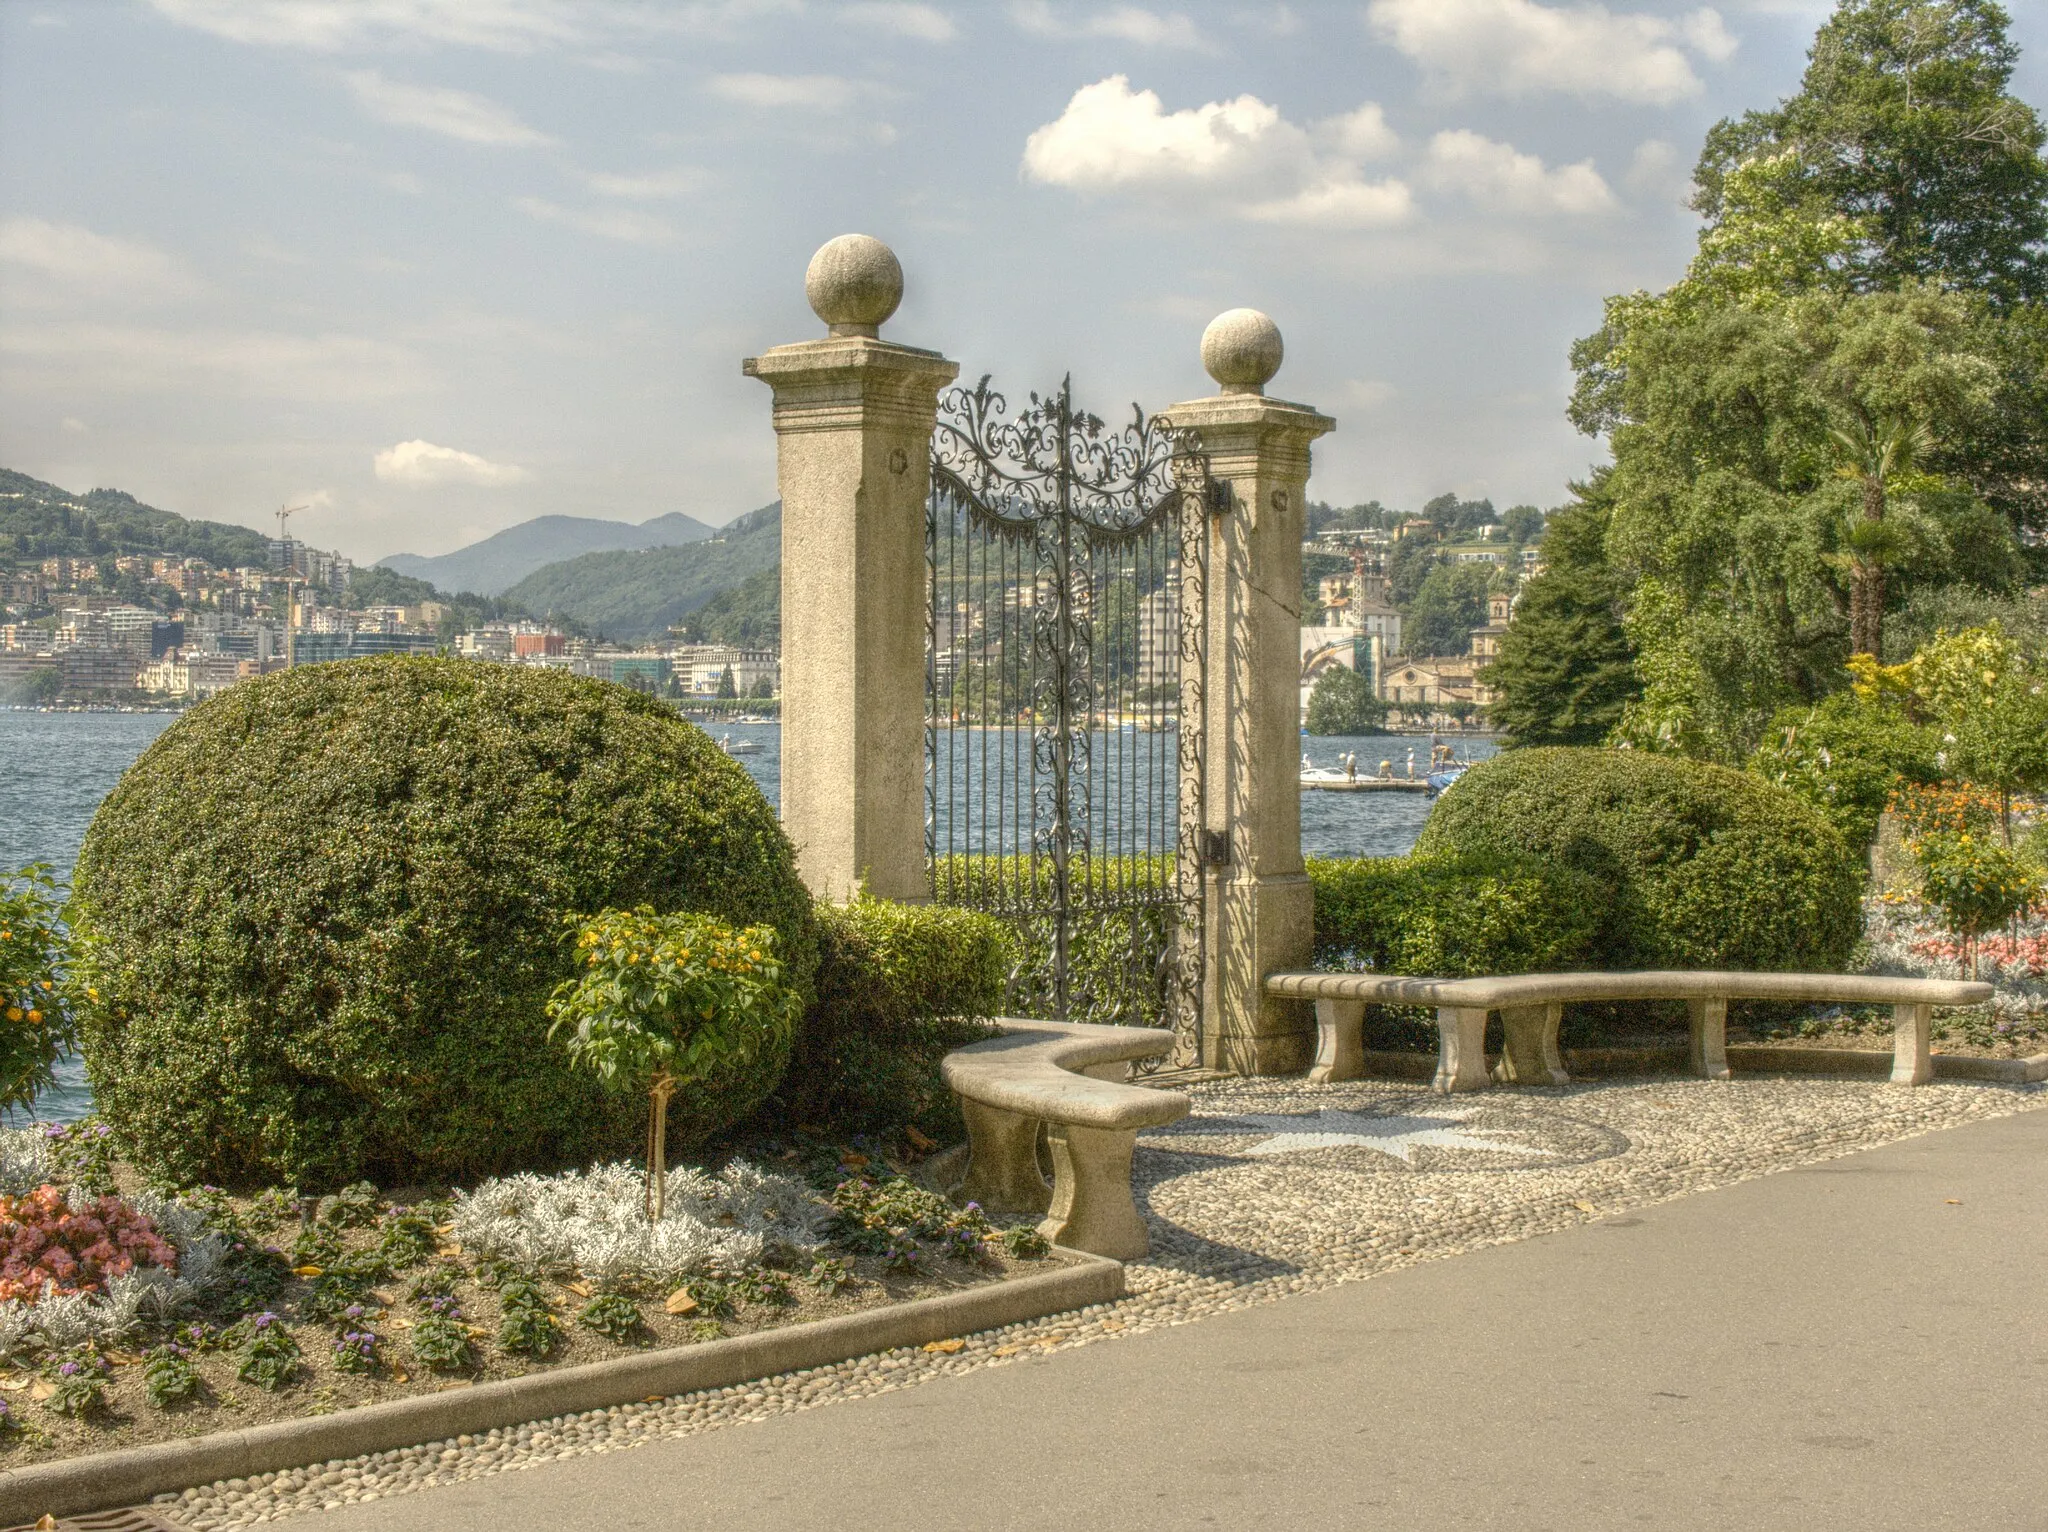 Image of Ticino